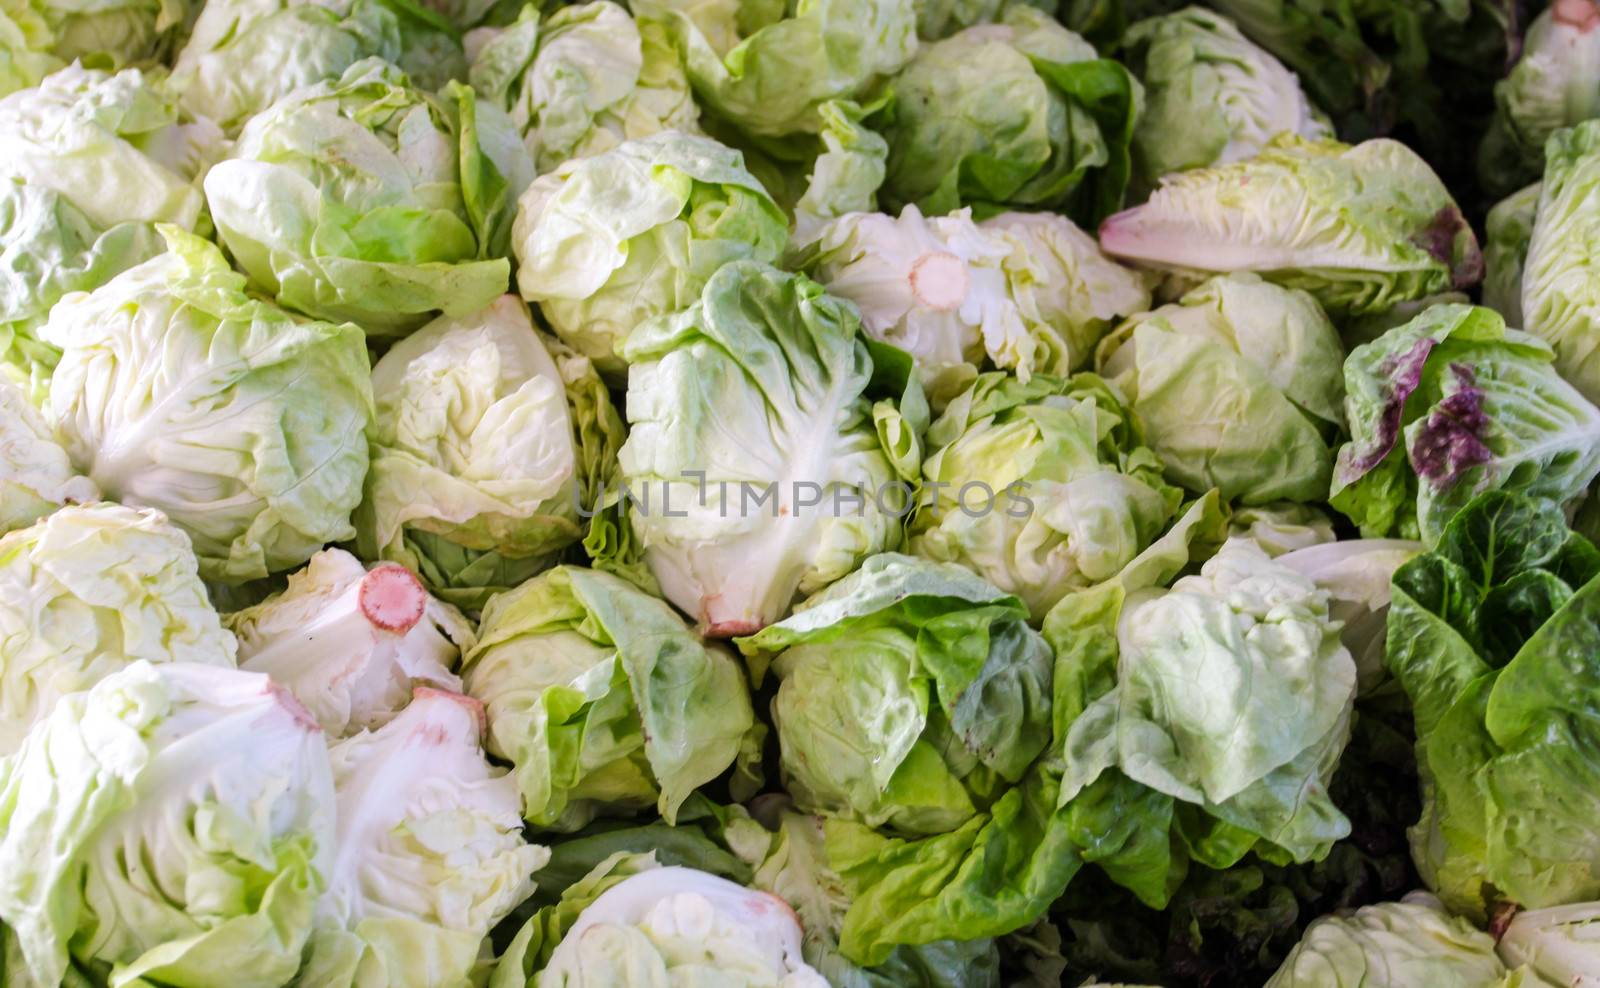 Pile of green iceberg lettuce at a farmers market.